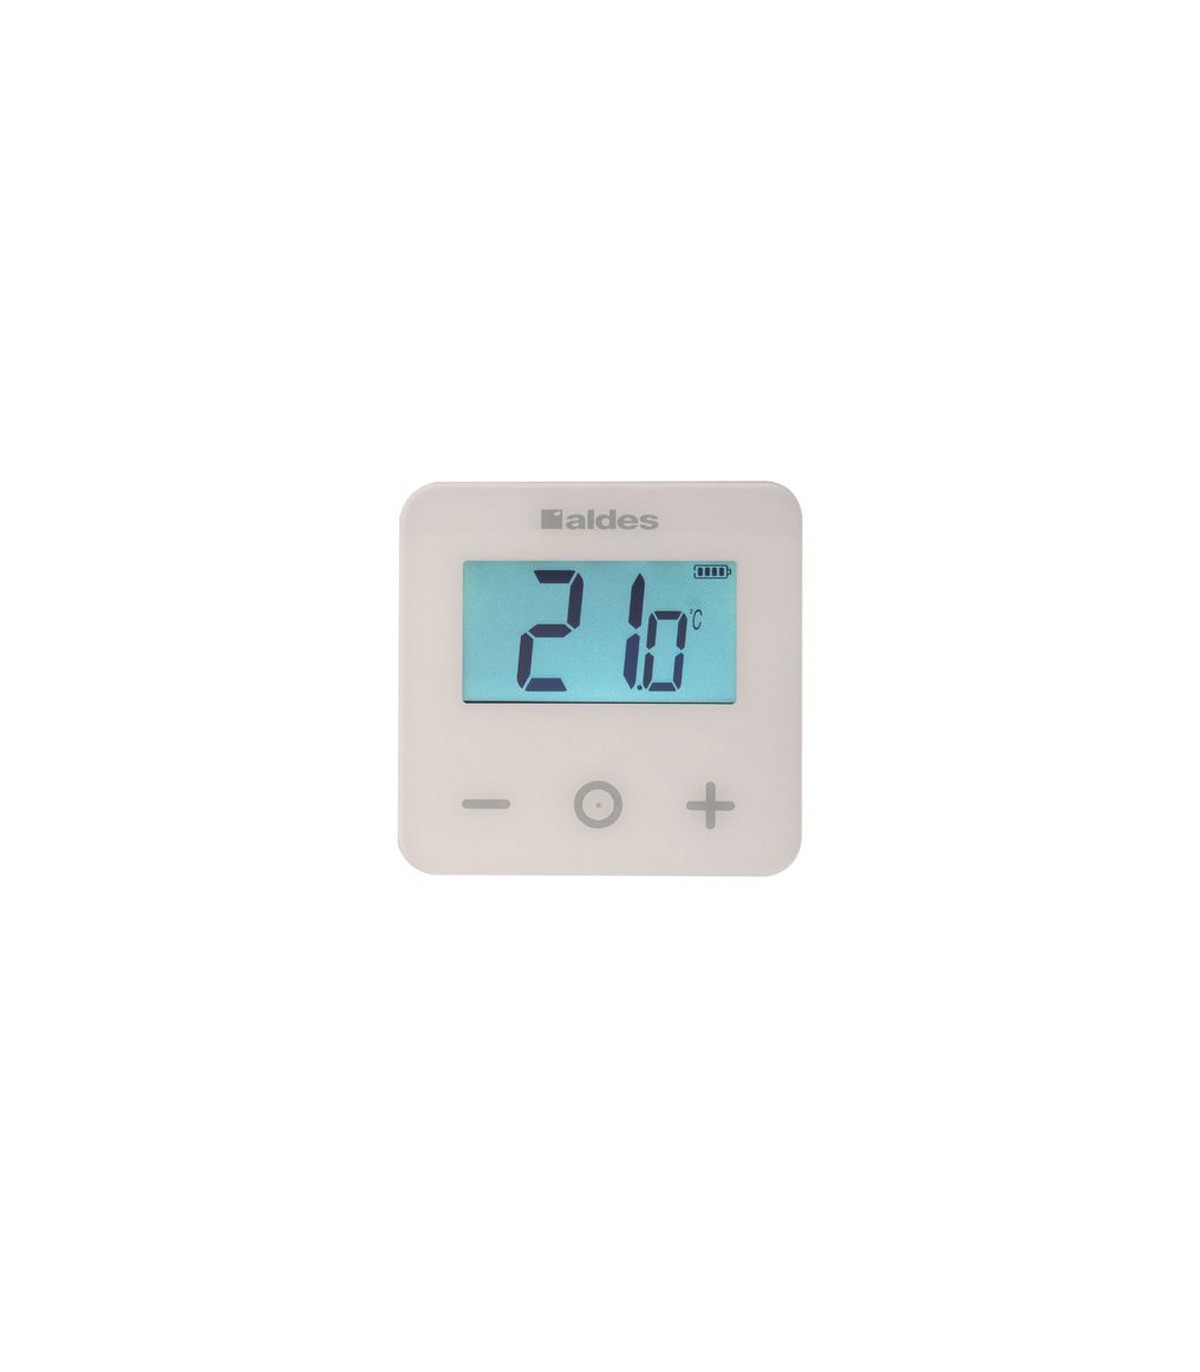 Thermostat simple digital filaire ou à onde radio